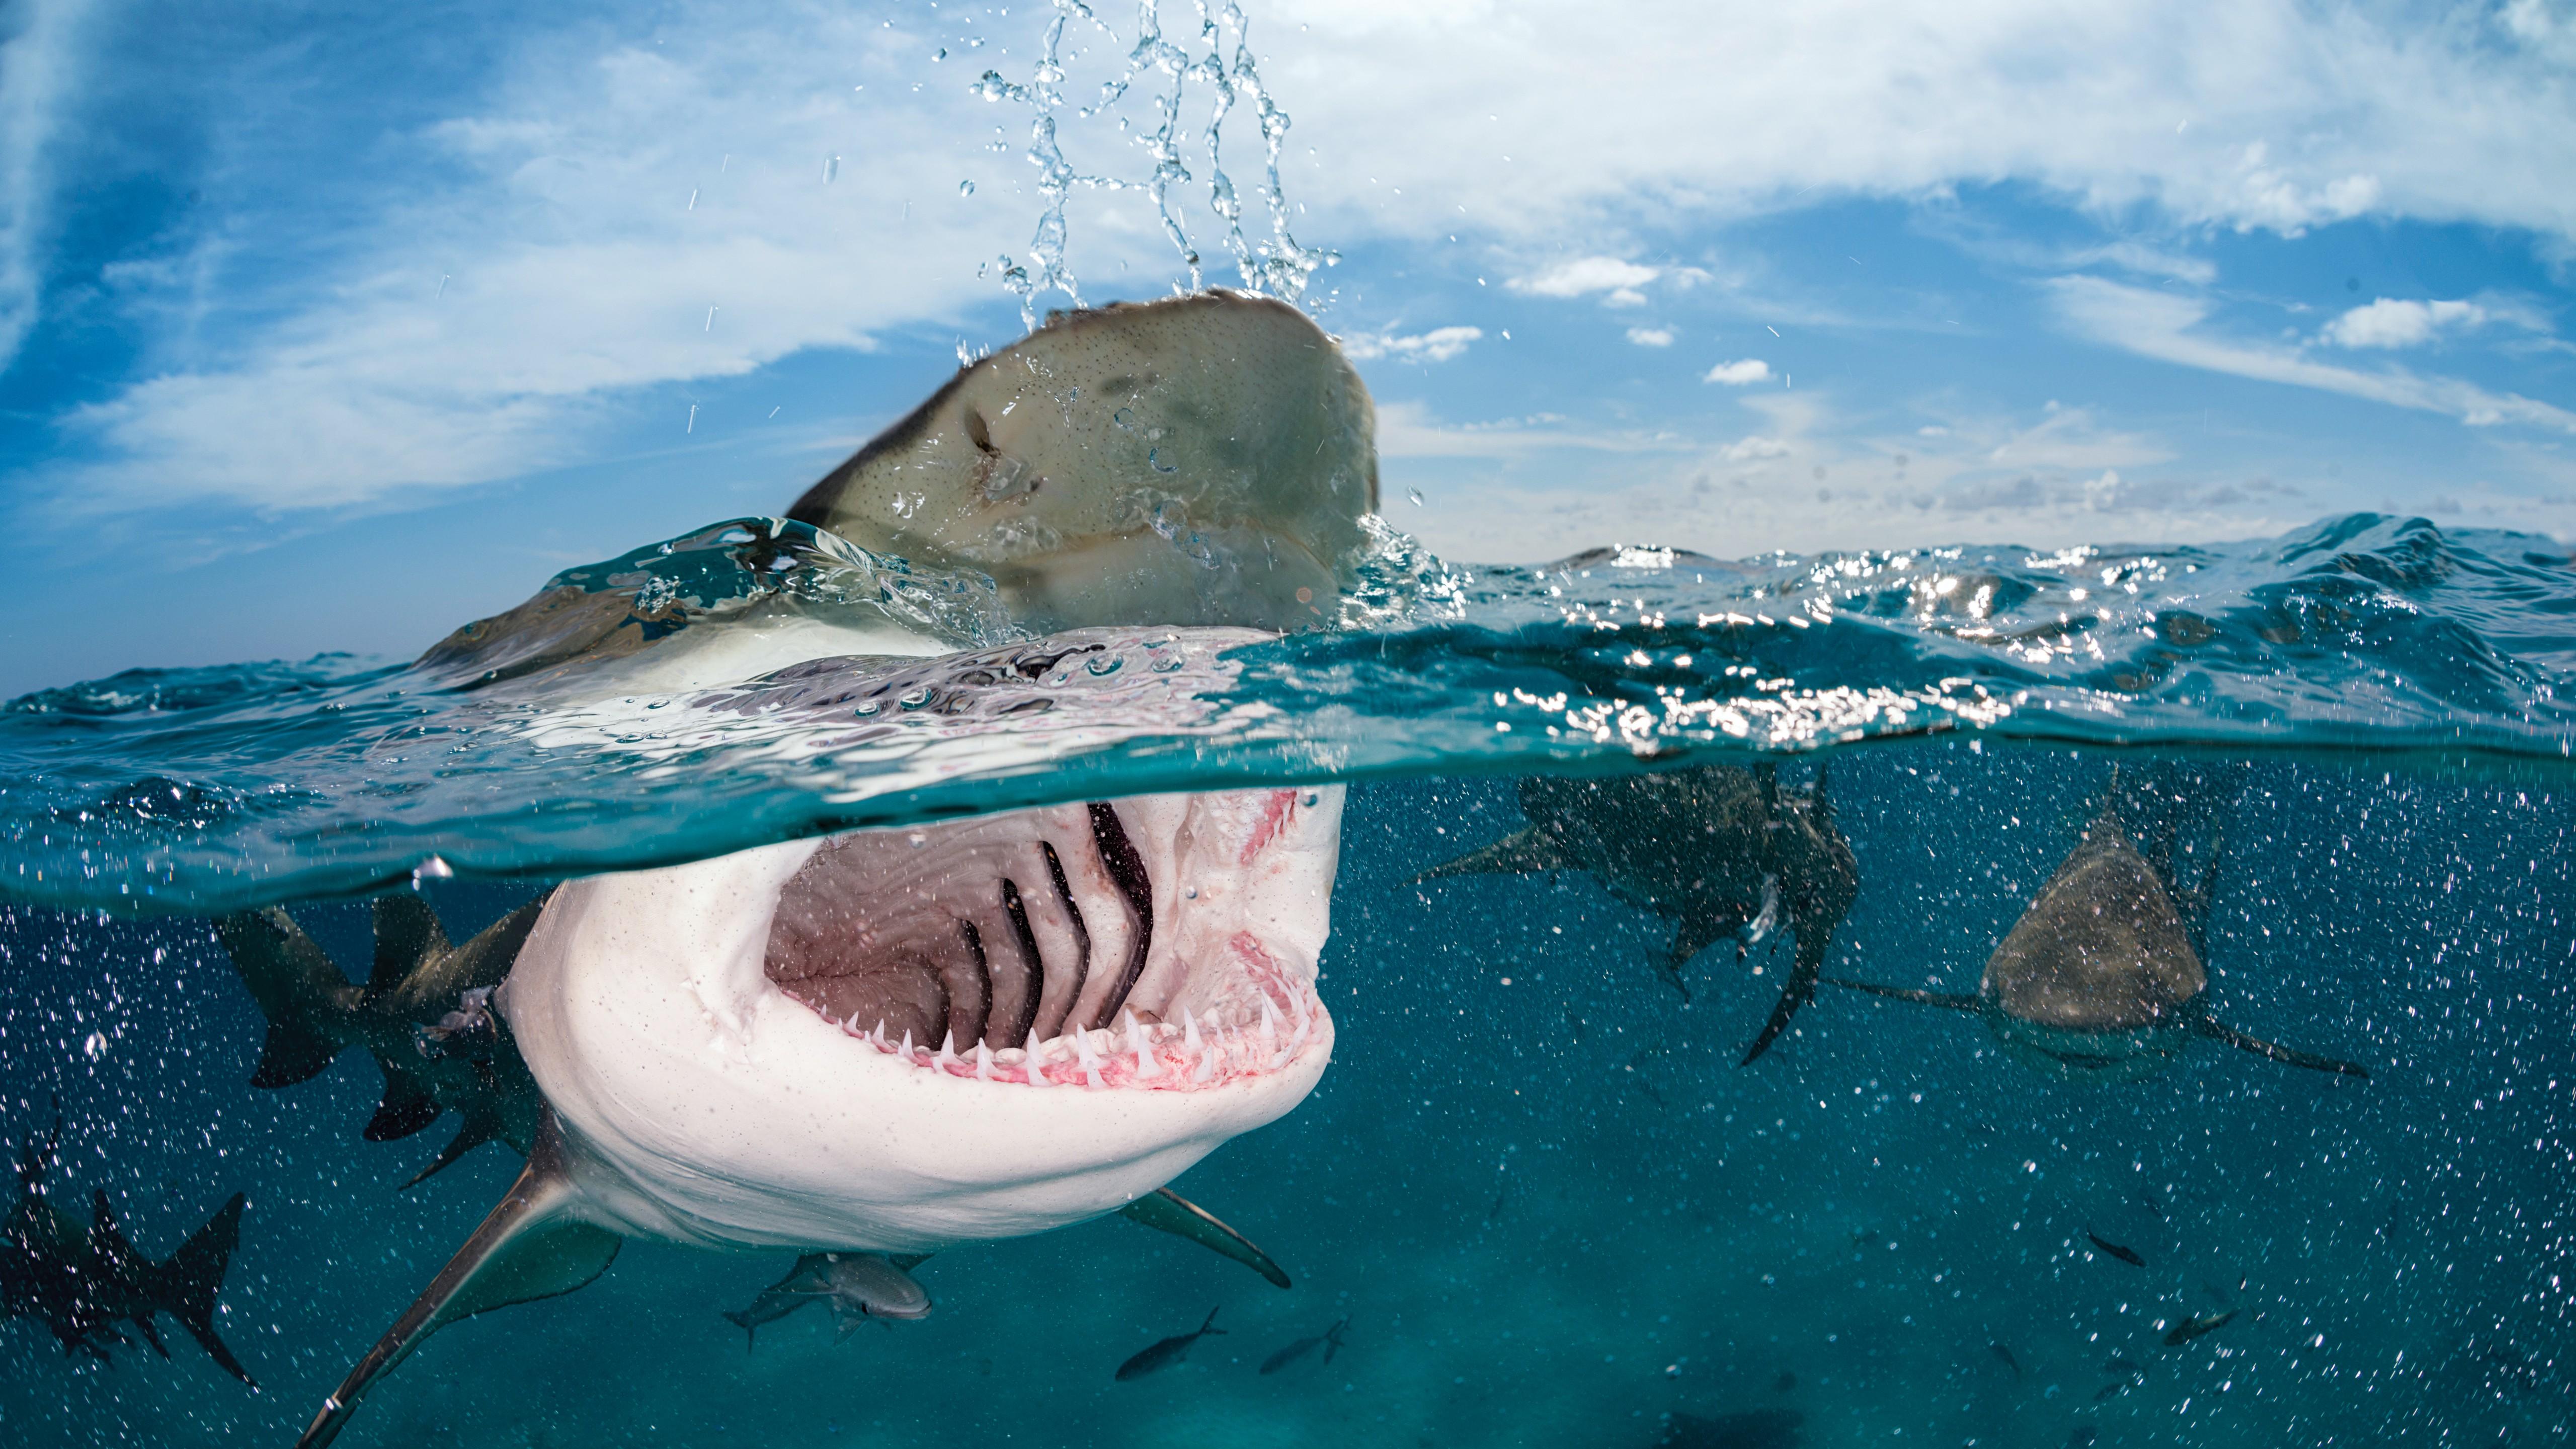 Wallpaper Shark, 5k, 4k wallpaper, 8k, Indian, Caribbean